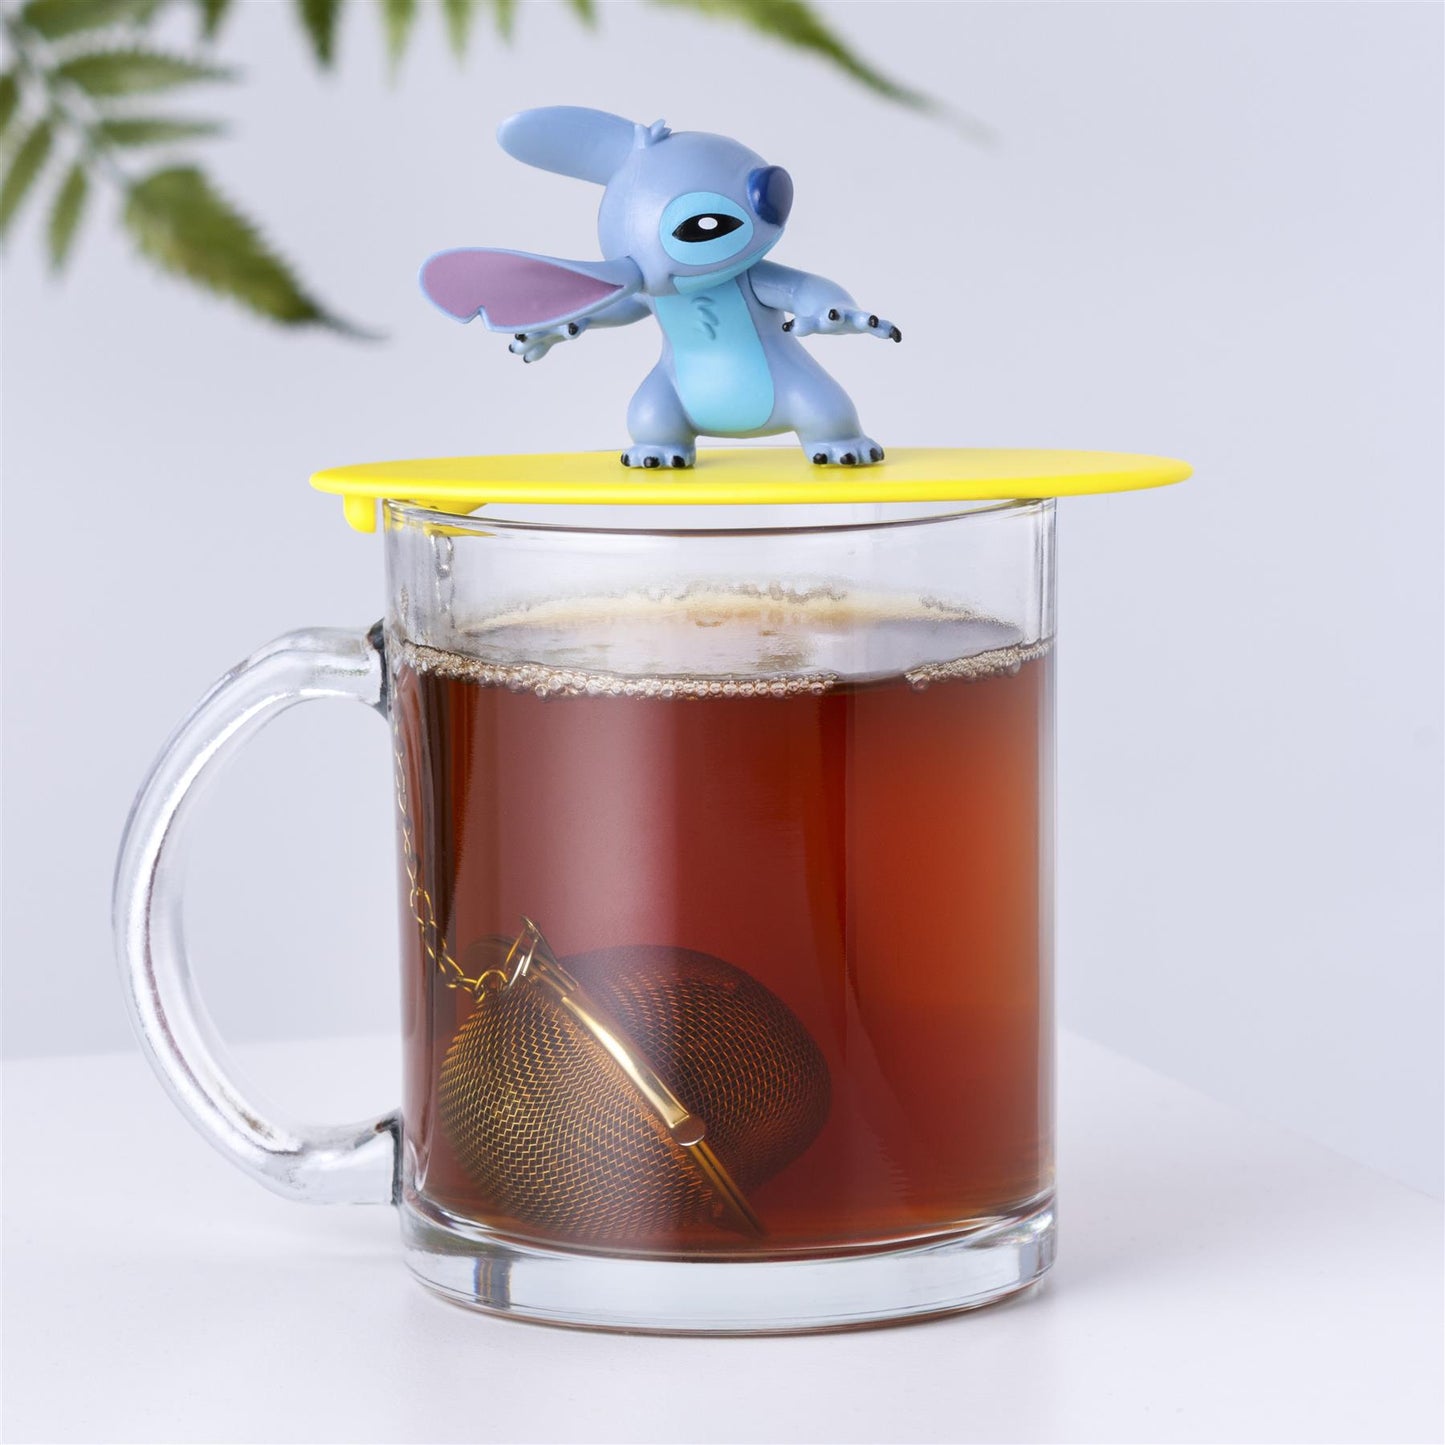 Disney Lilo and Stitch Tea Infuser